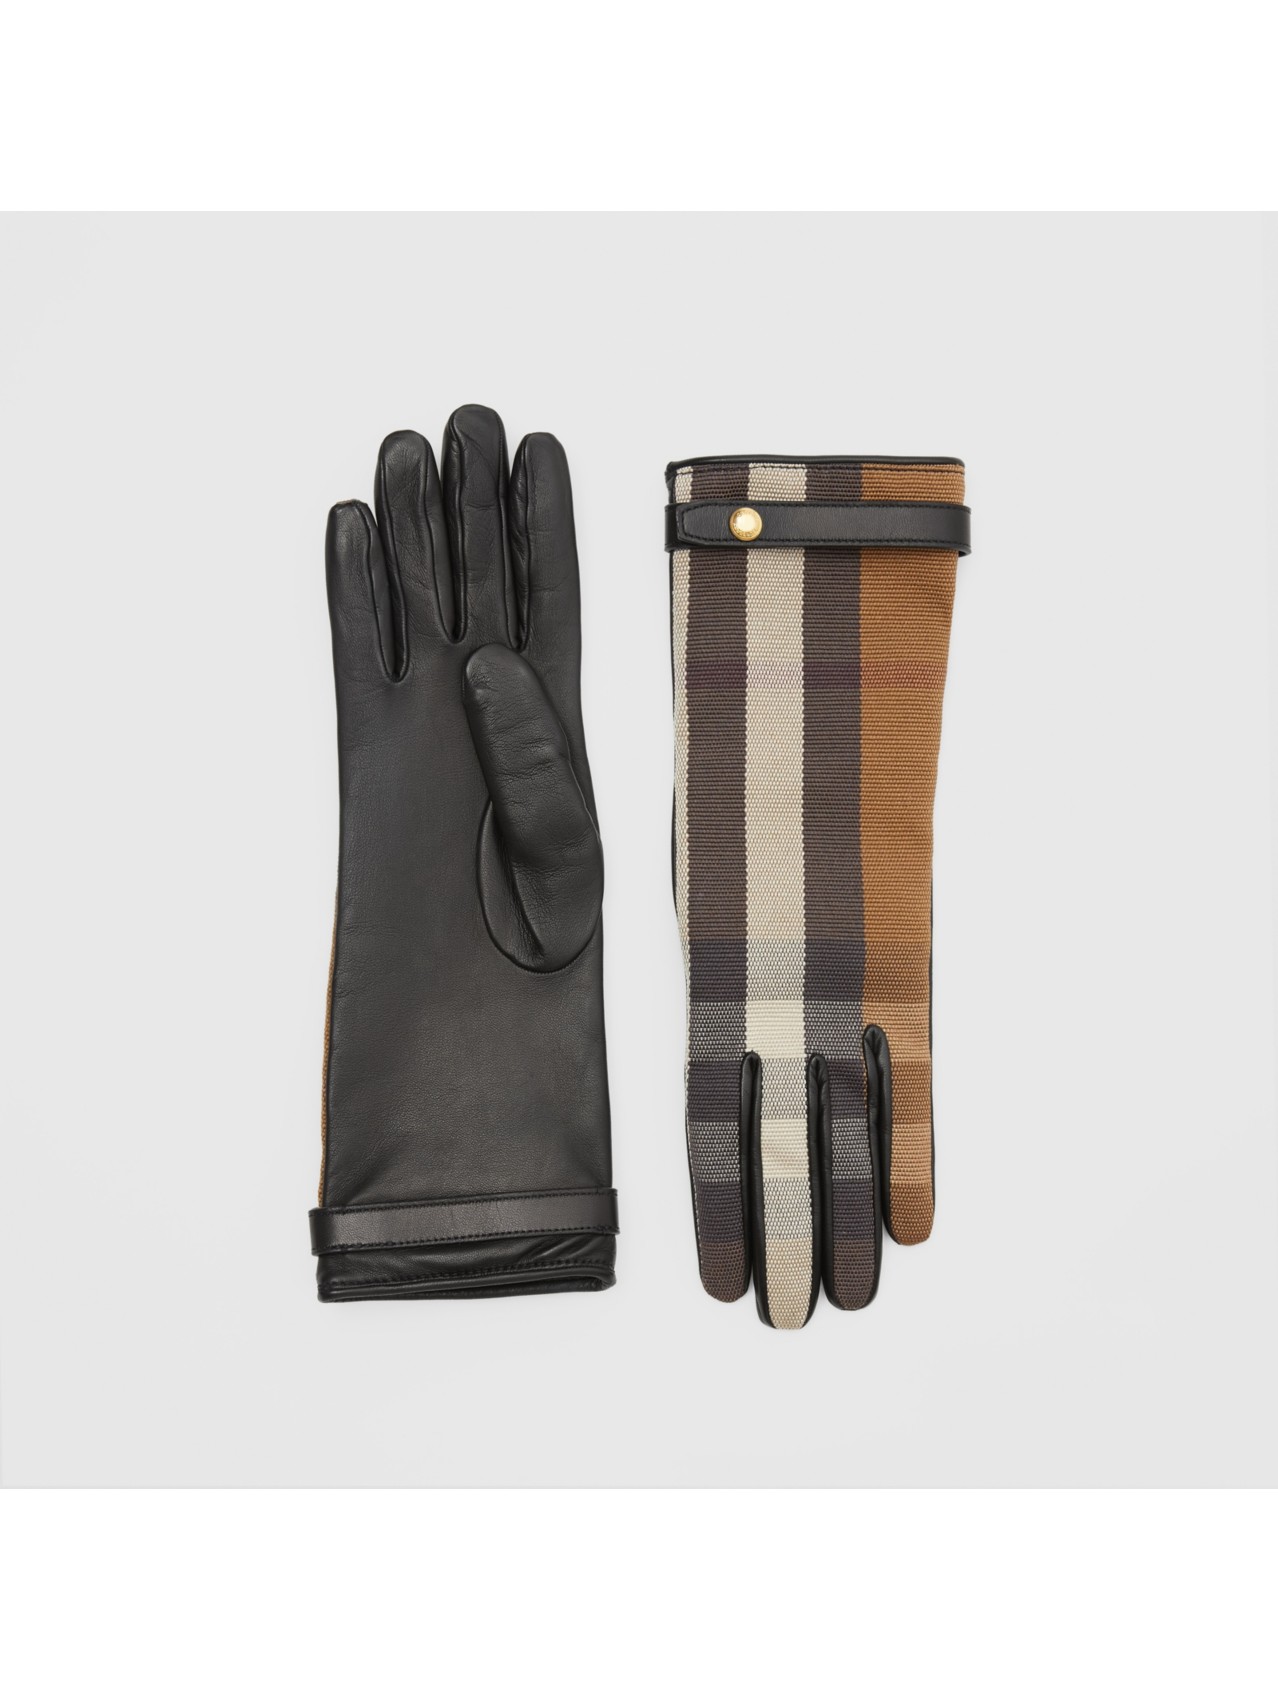 Designer Hats & Gloves | Burberry® Official